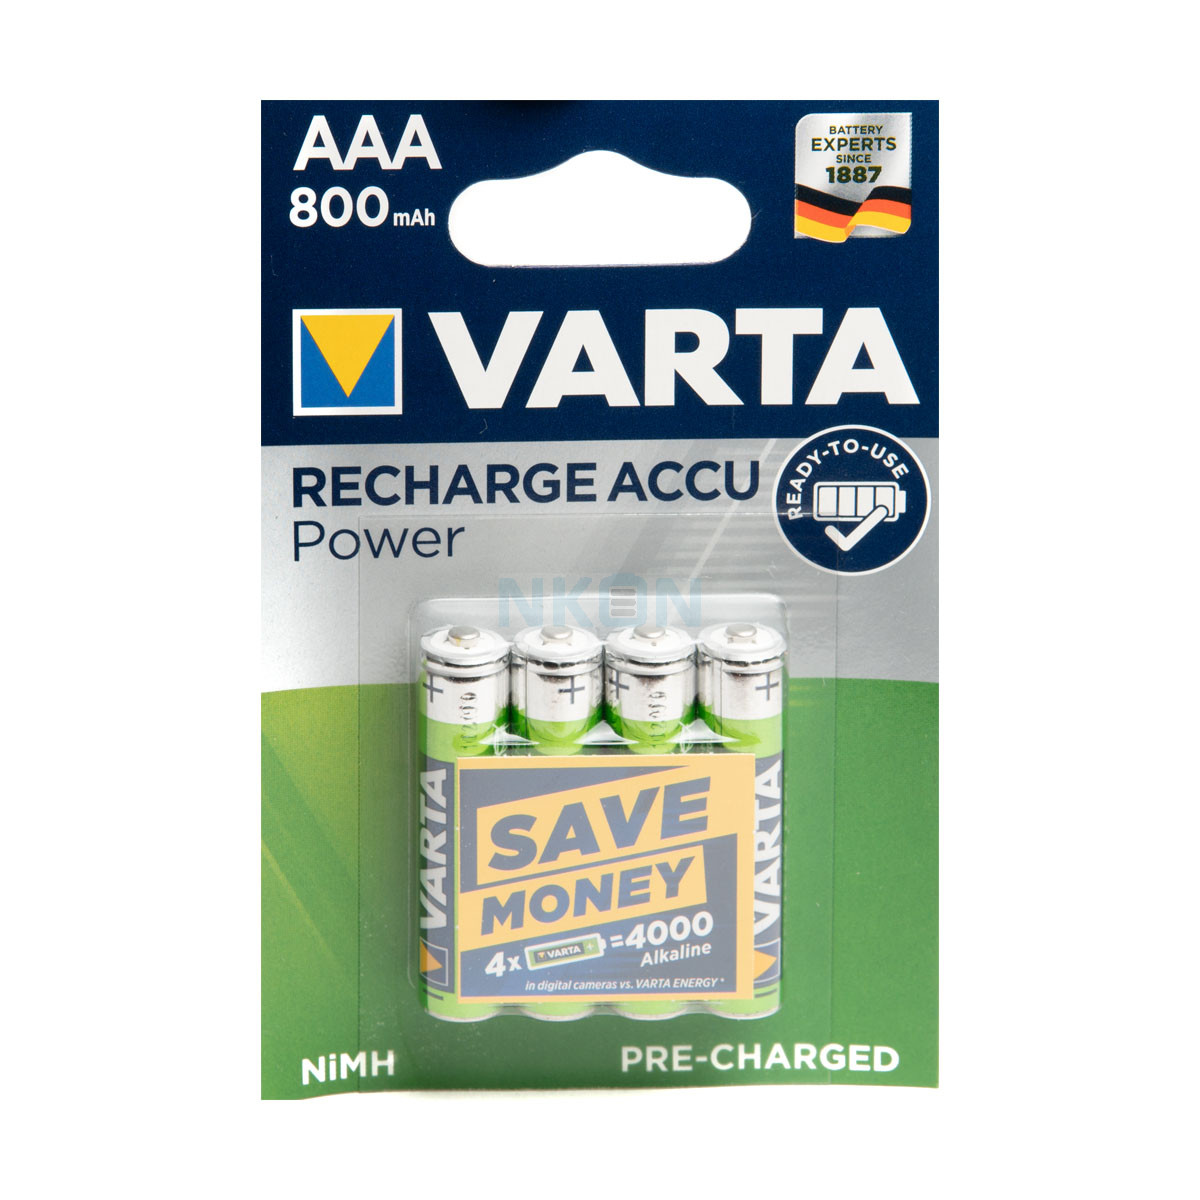 VARTA AAA rechargeable battery 800MAH PACK 4 - AliExpress